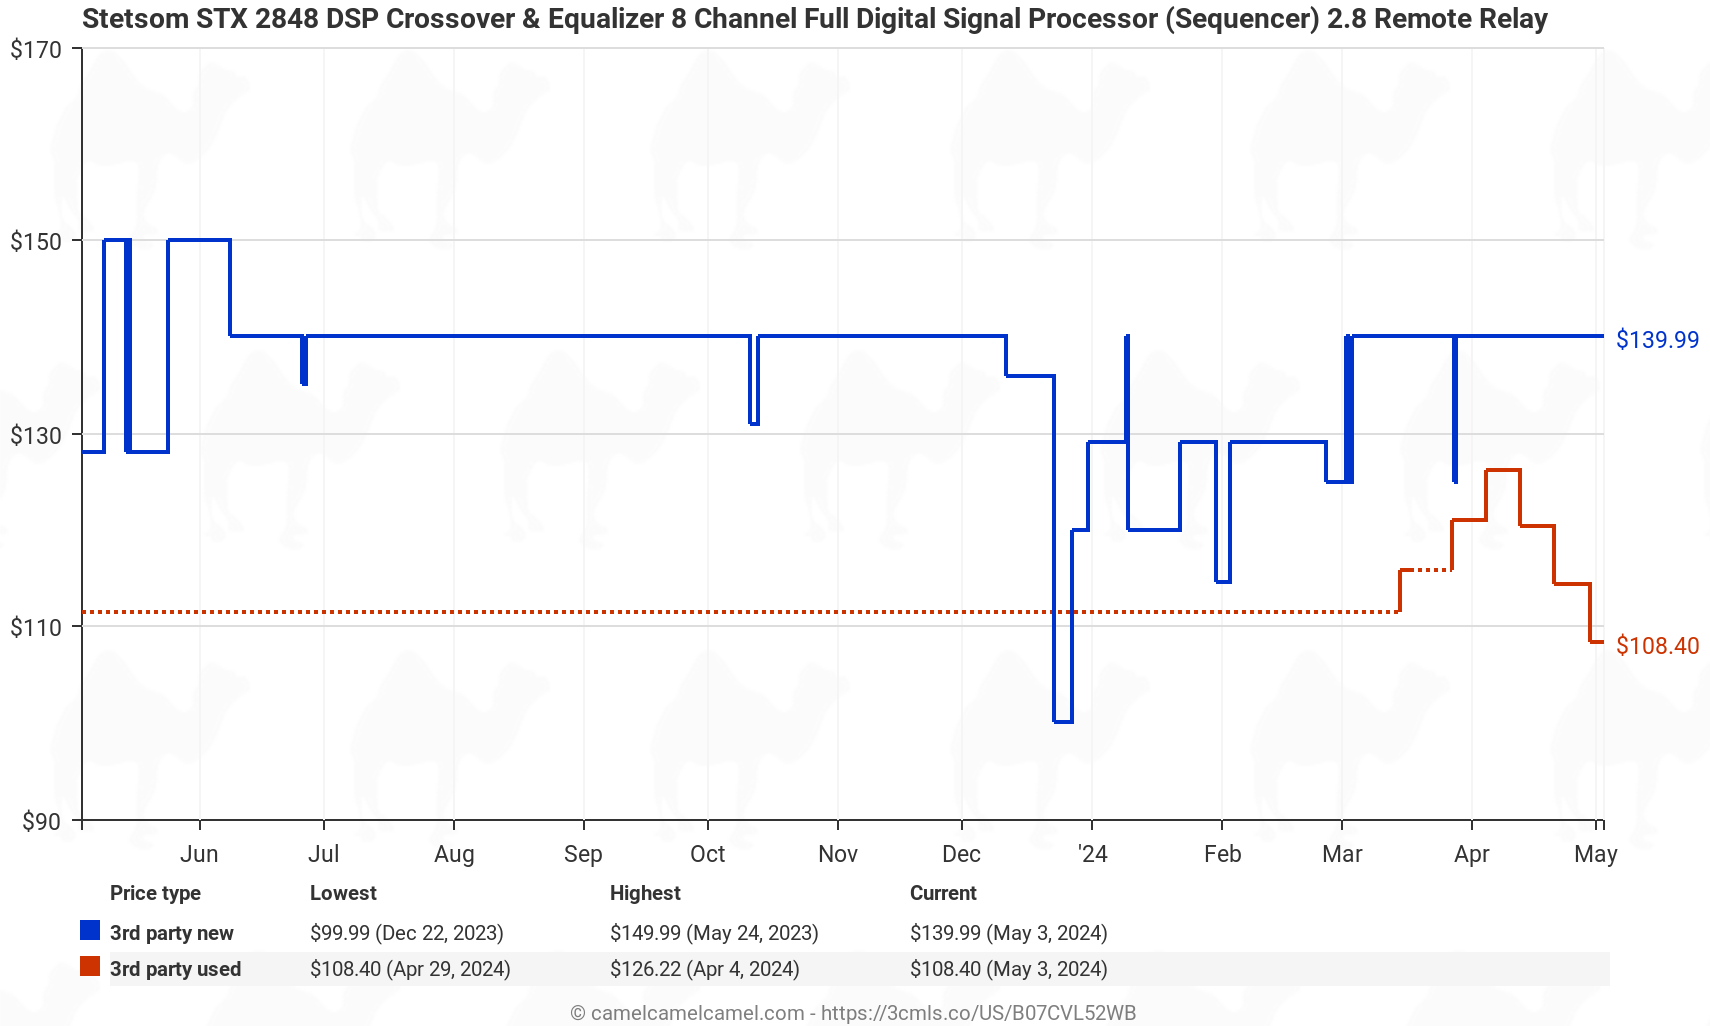 Stetsom STX 2848 DSP Crossover & Equalizer 8 Channel Full Digital Signal Processor (Sequencer) - Price History: B07CVL52WB